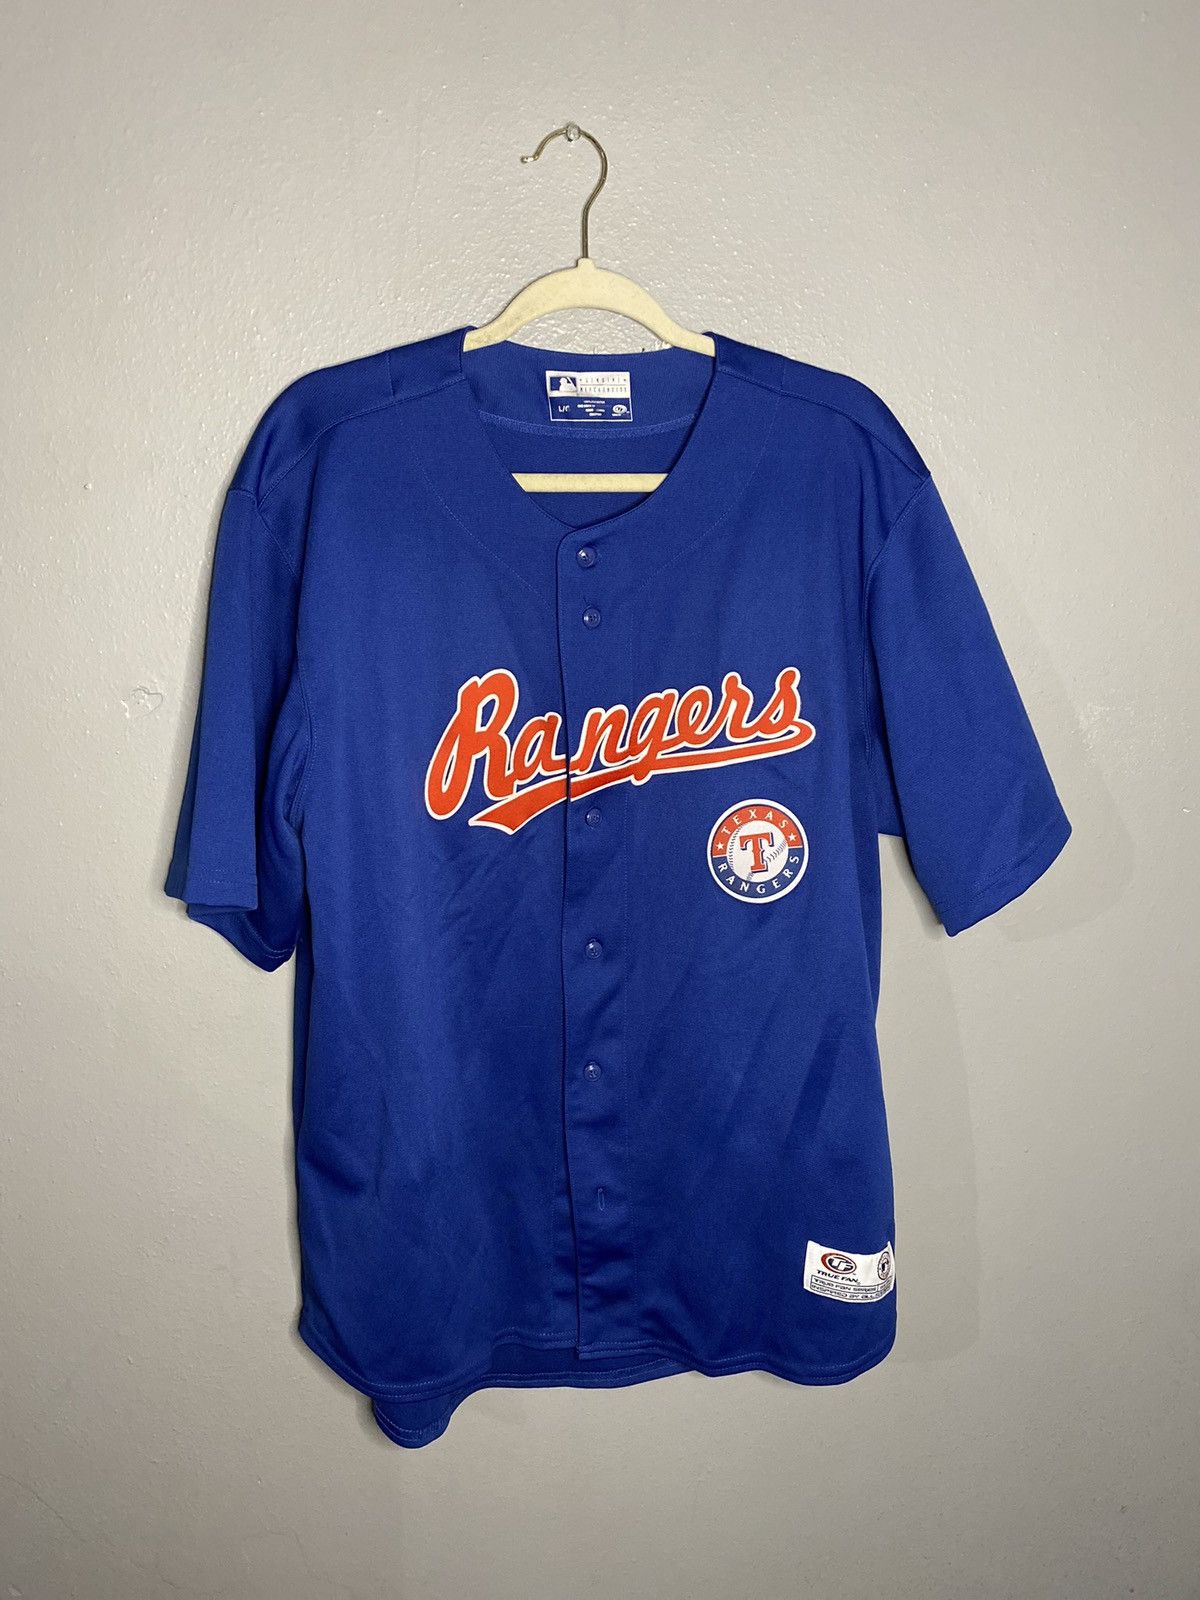 Genuine Merchandise By True Fan Texas Rangers Jersey Stitched Size US XL / EU 56 / 4 - 1 Preview